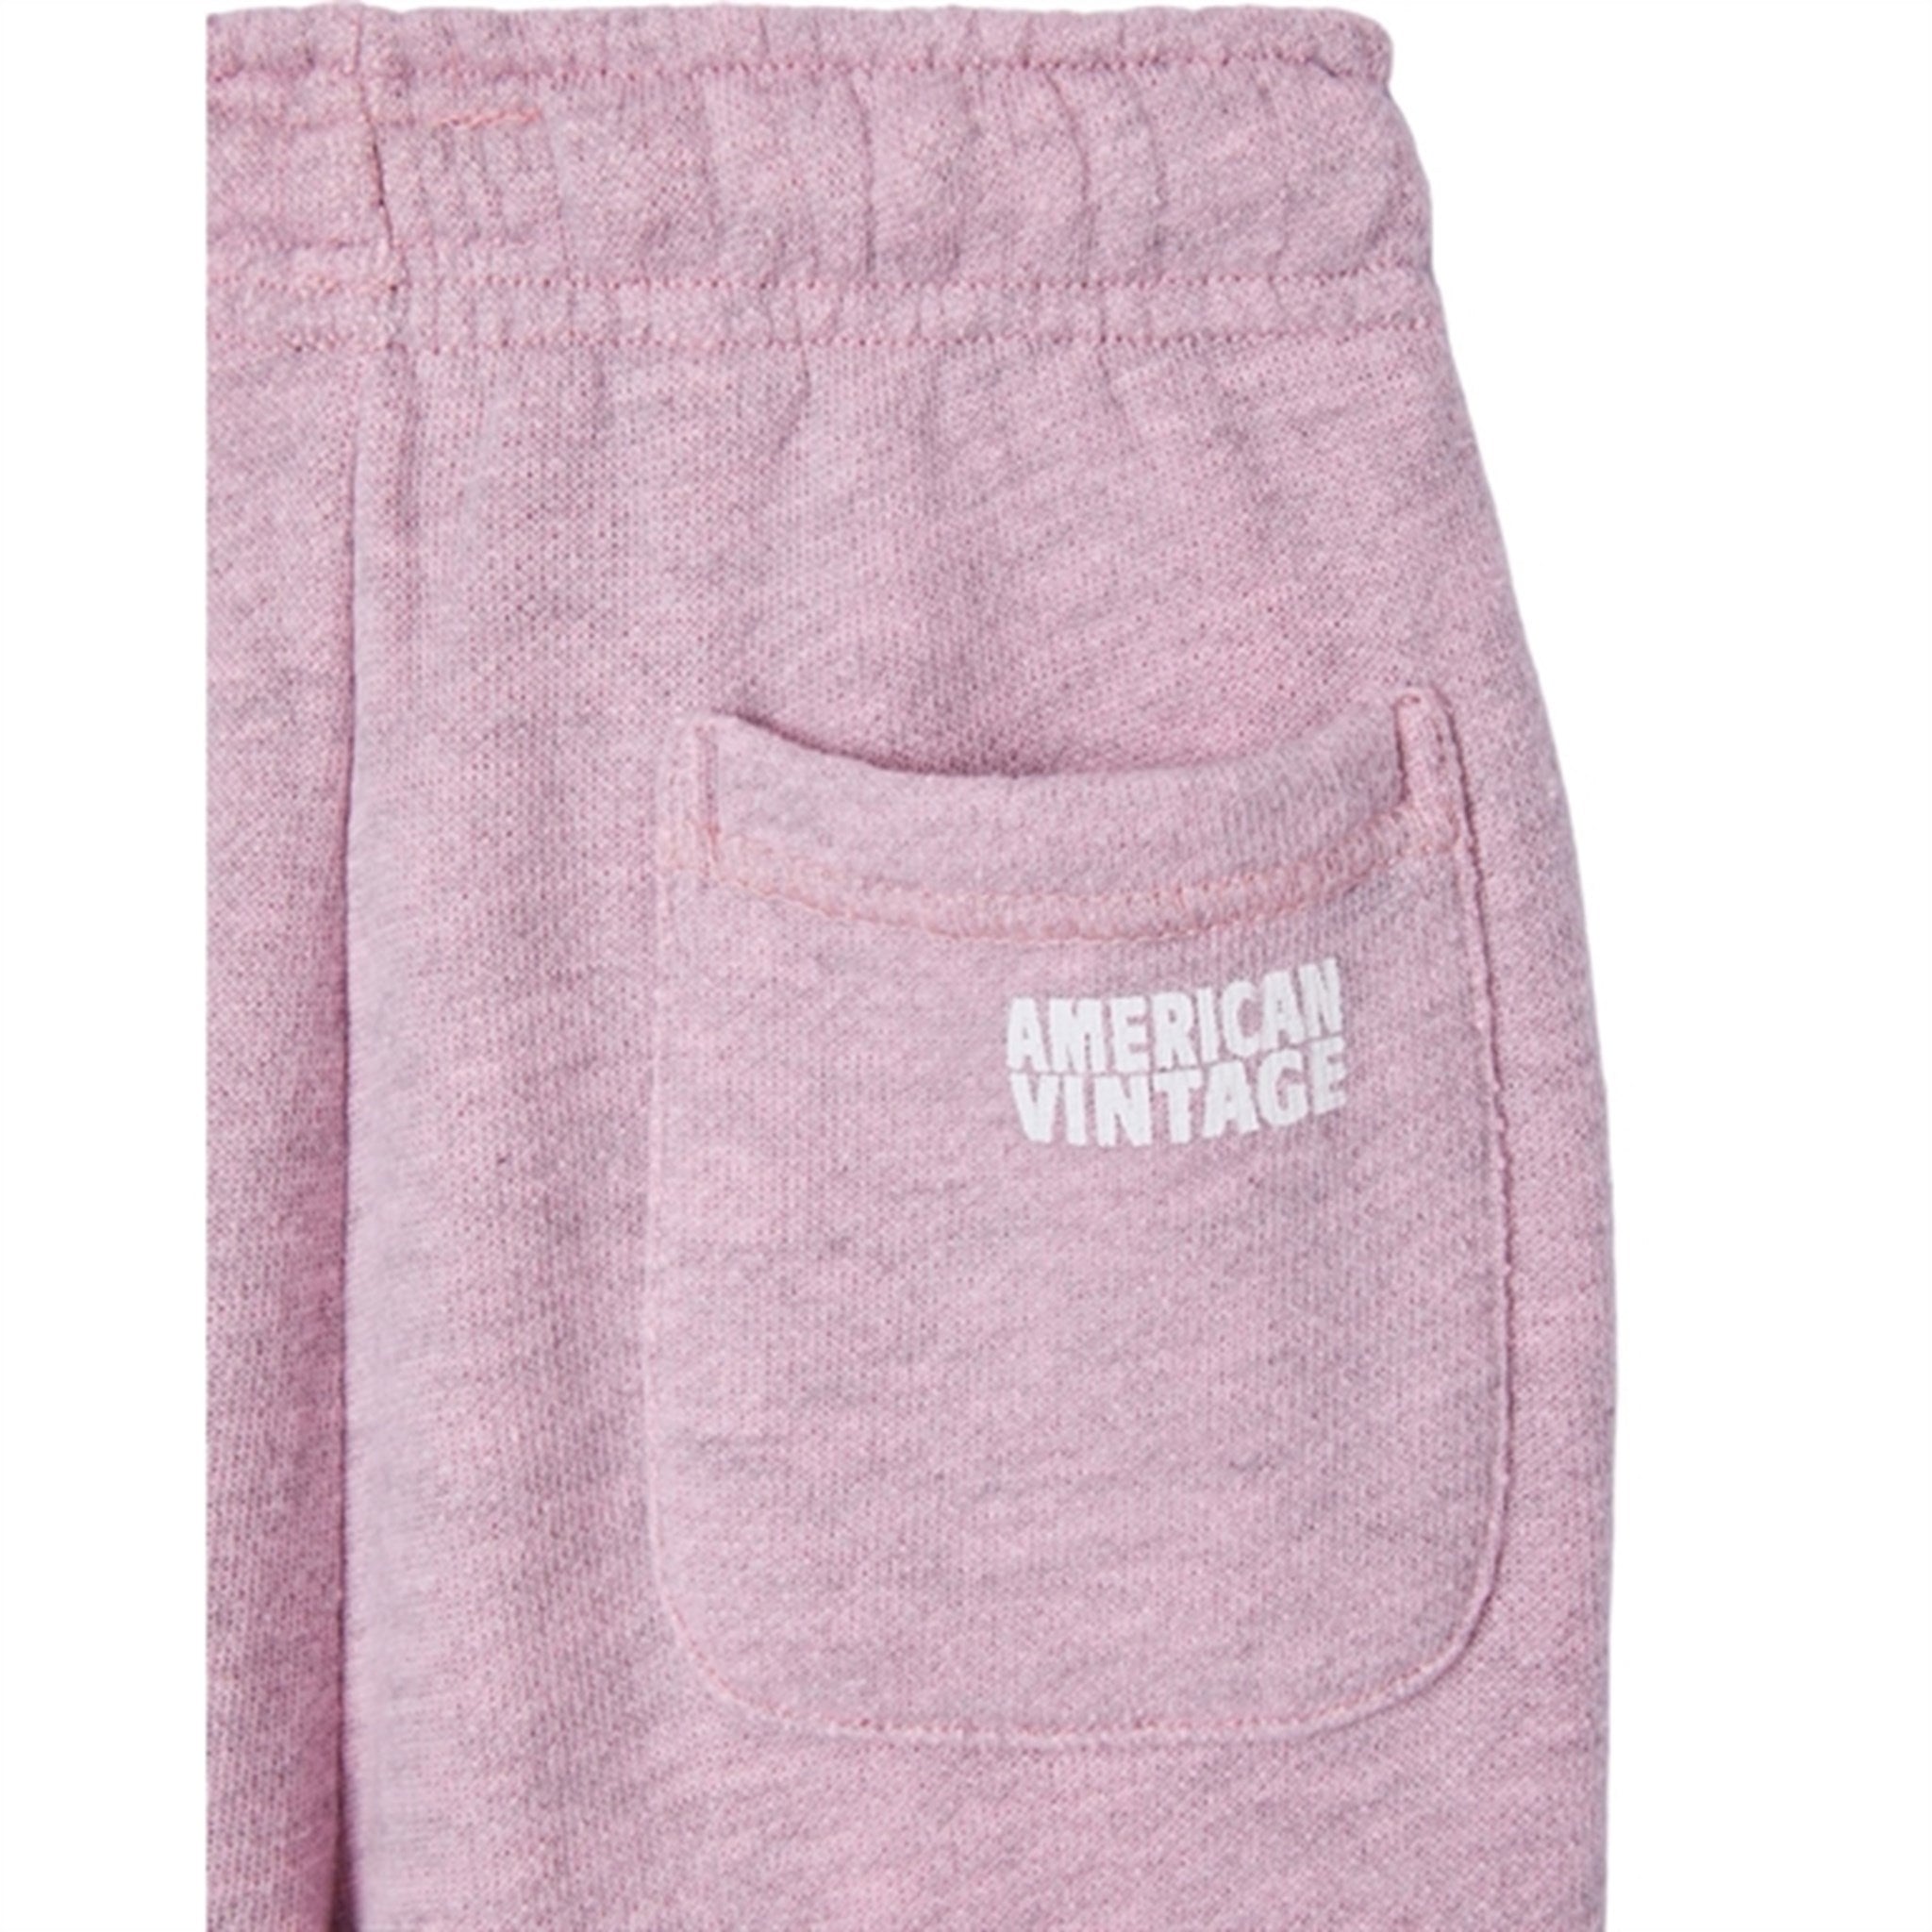 American Vintage Sweatpants Satin Surteint 2